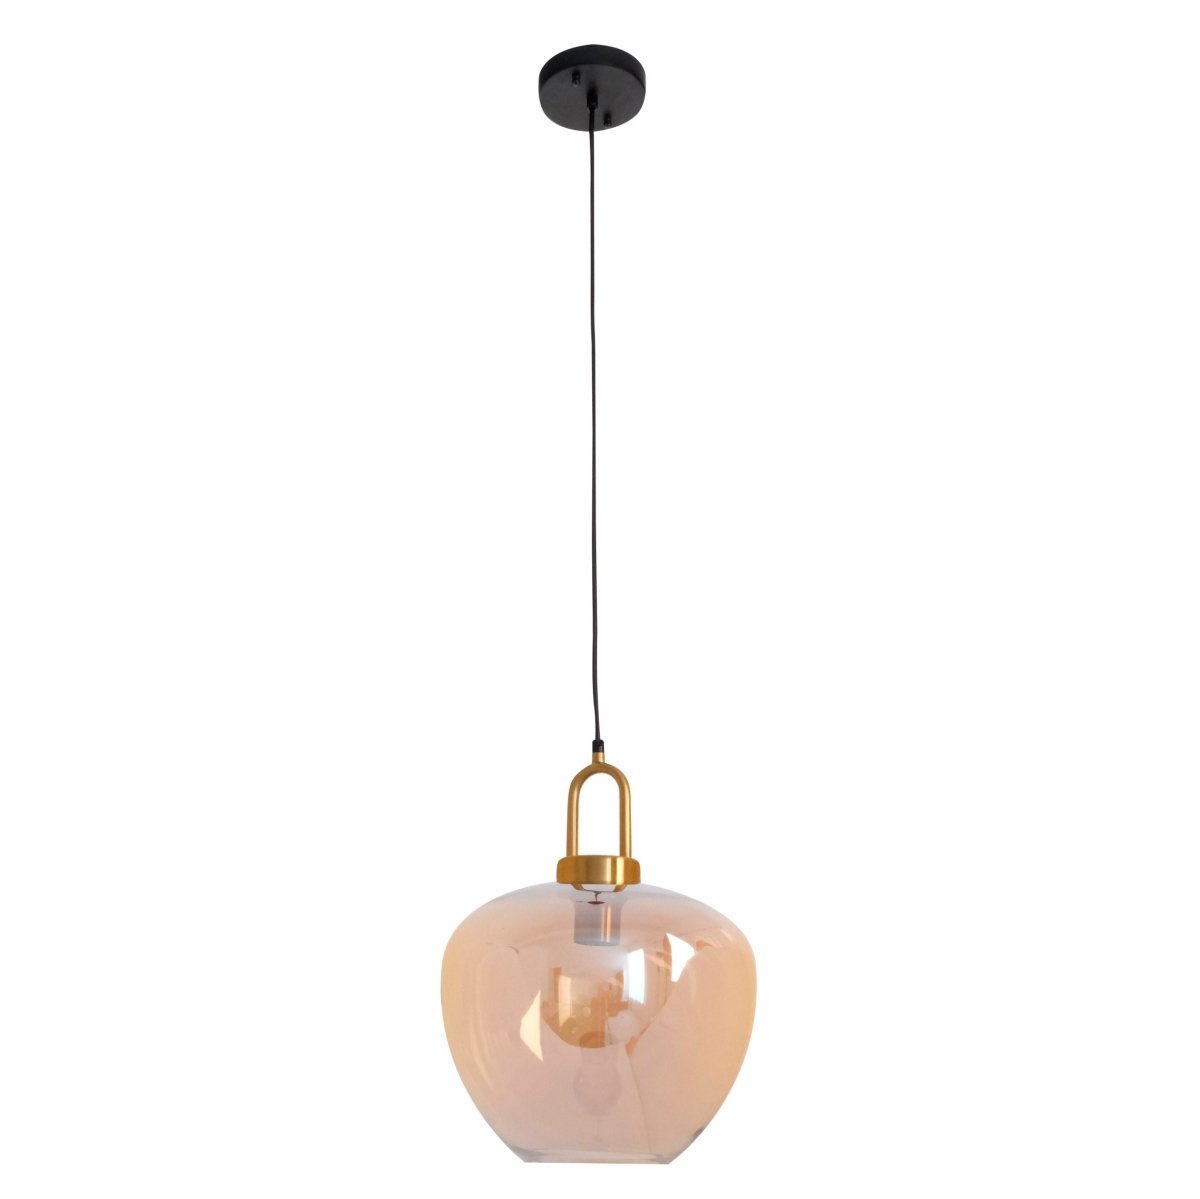 Main image of Amber Glass Globe Pendant Light with E27 Fitting | TEKLED 150-18348